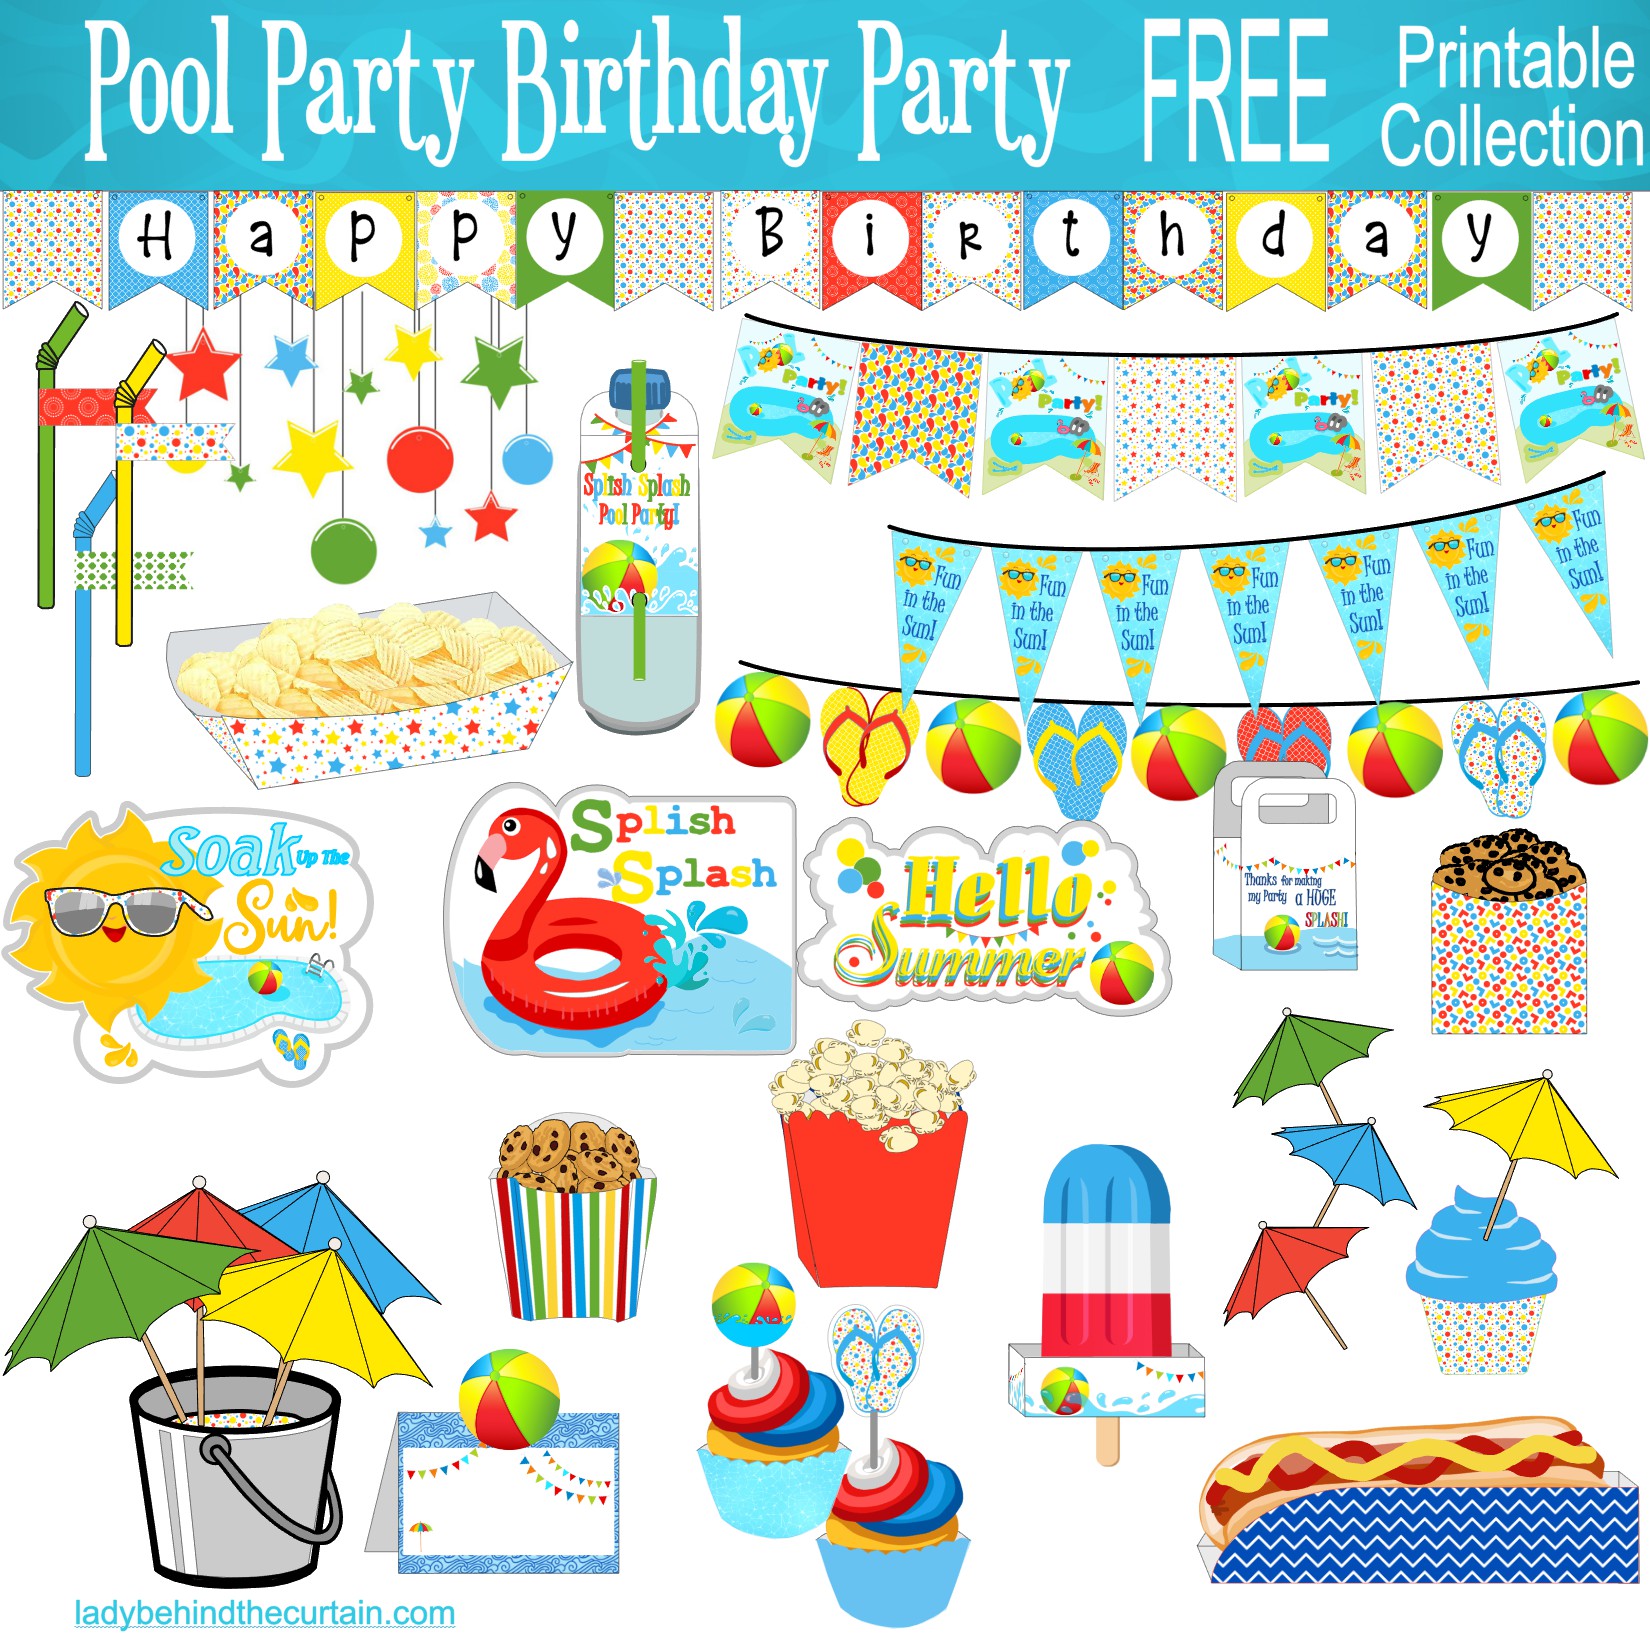 Splish Splash Pool Party FREE Printable Collection